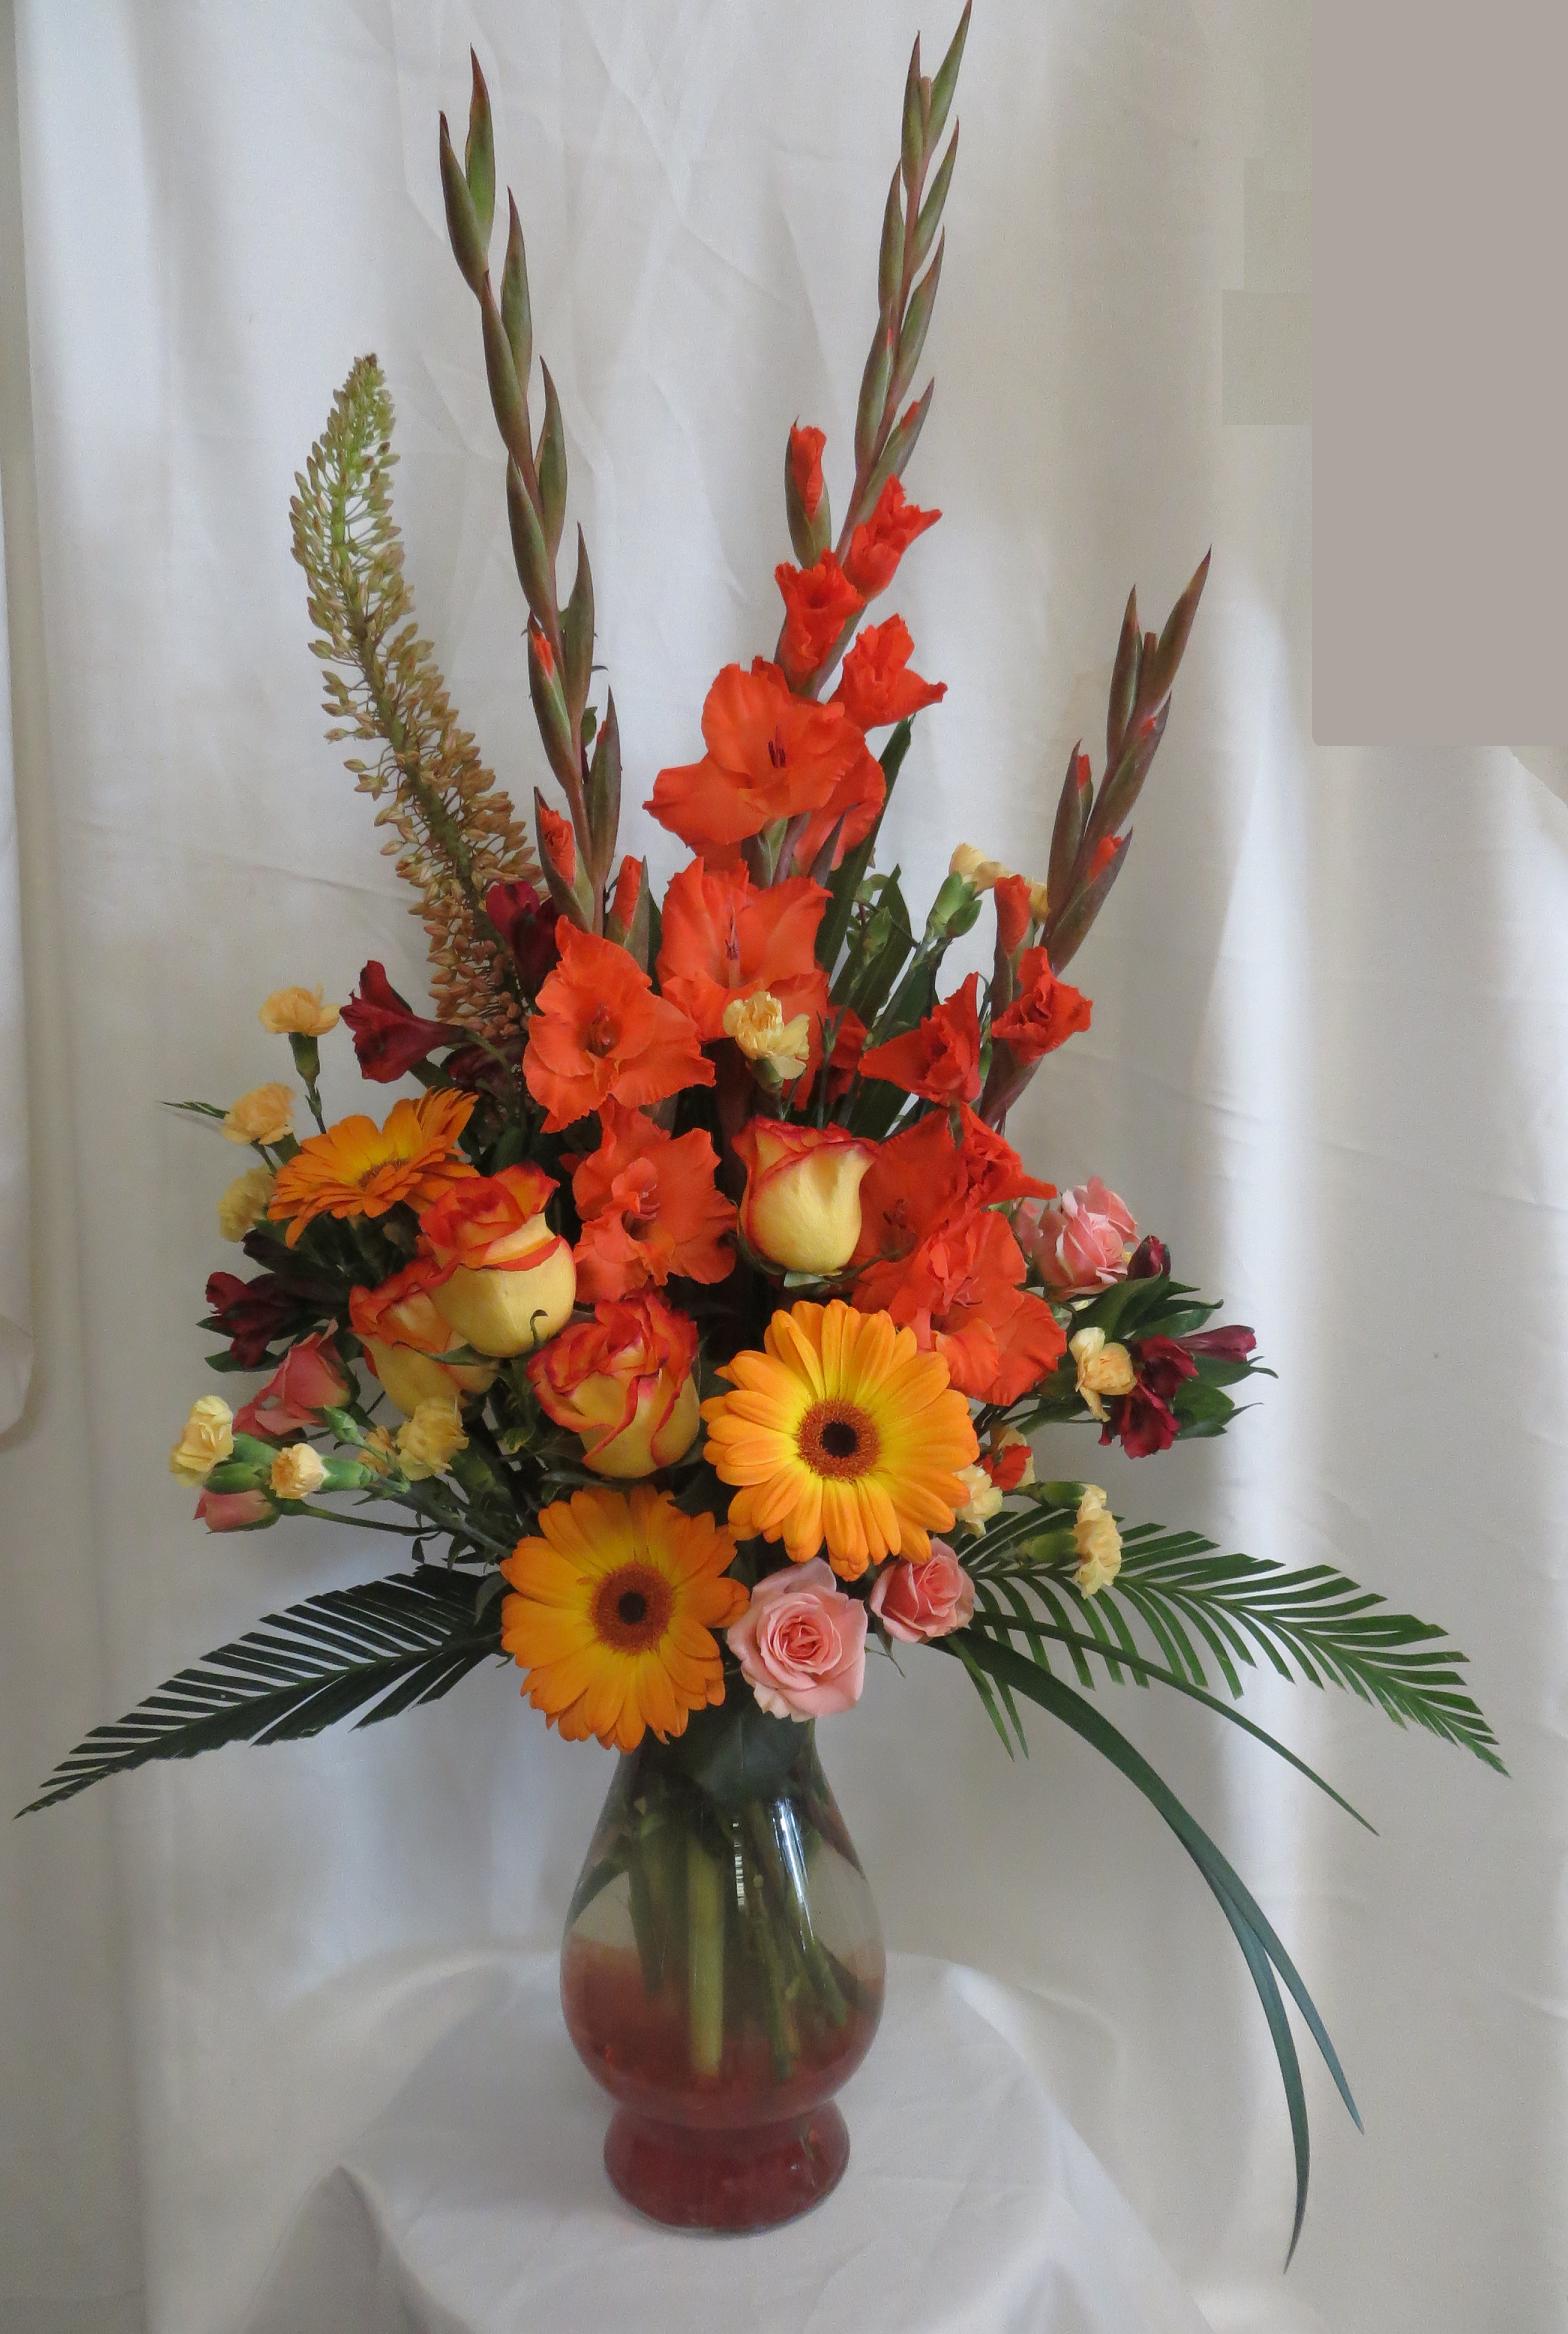 friendswood flowers shop florist texas tx delivery orange flowers